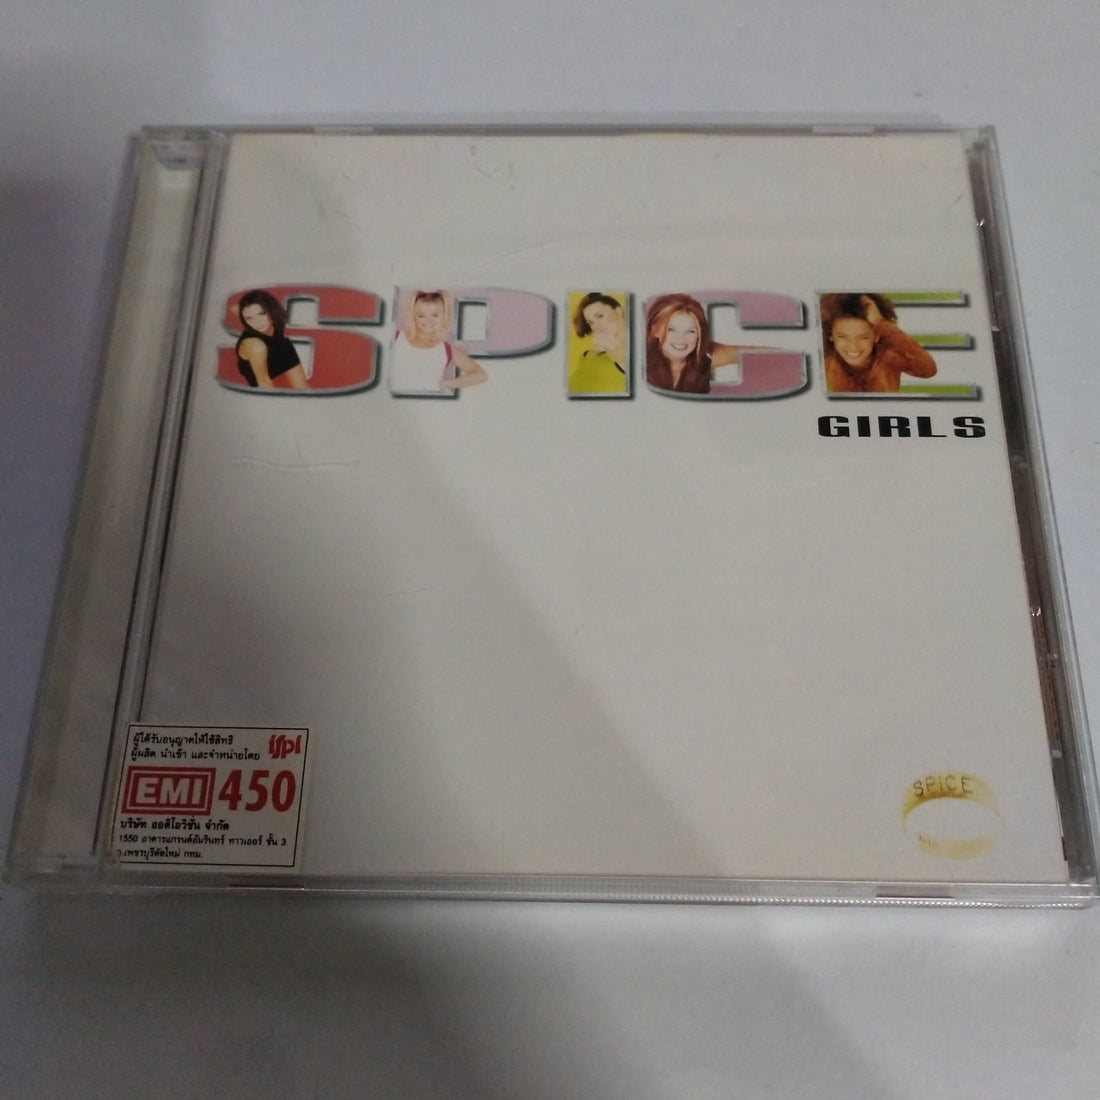 Spice Girls - Spice (CD) (VG+)